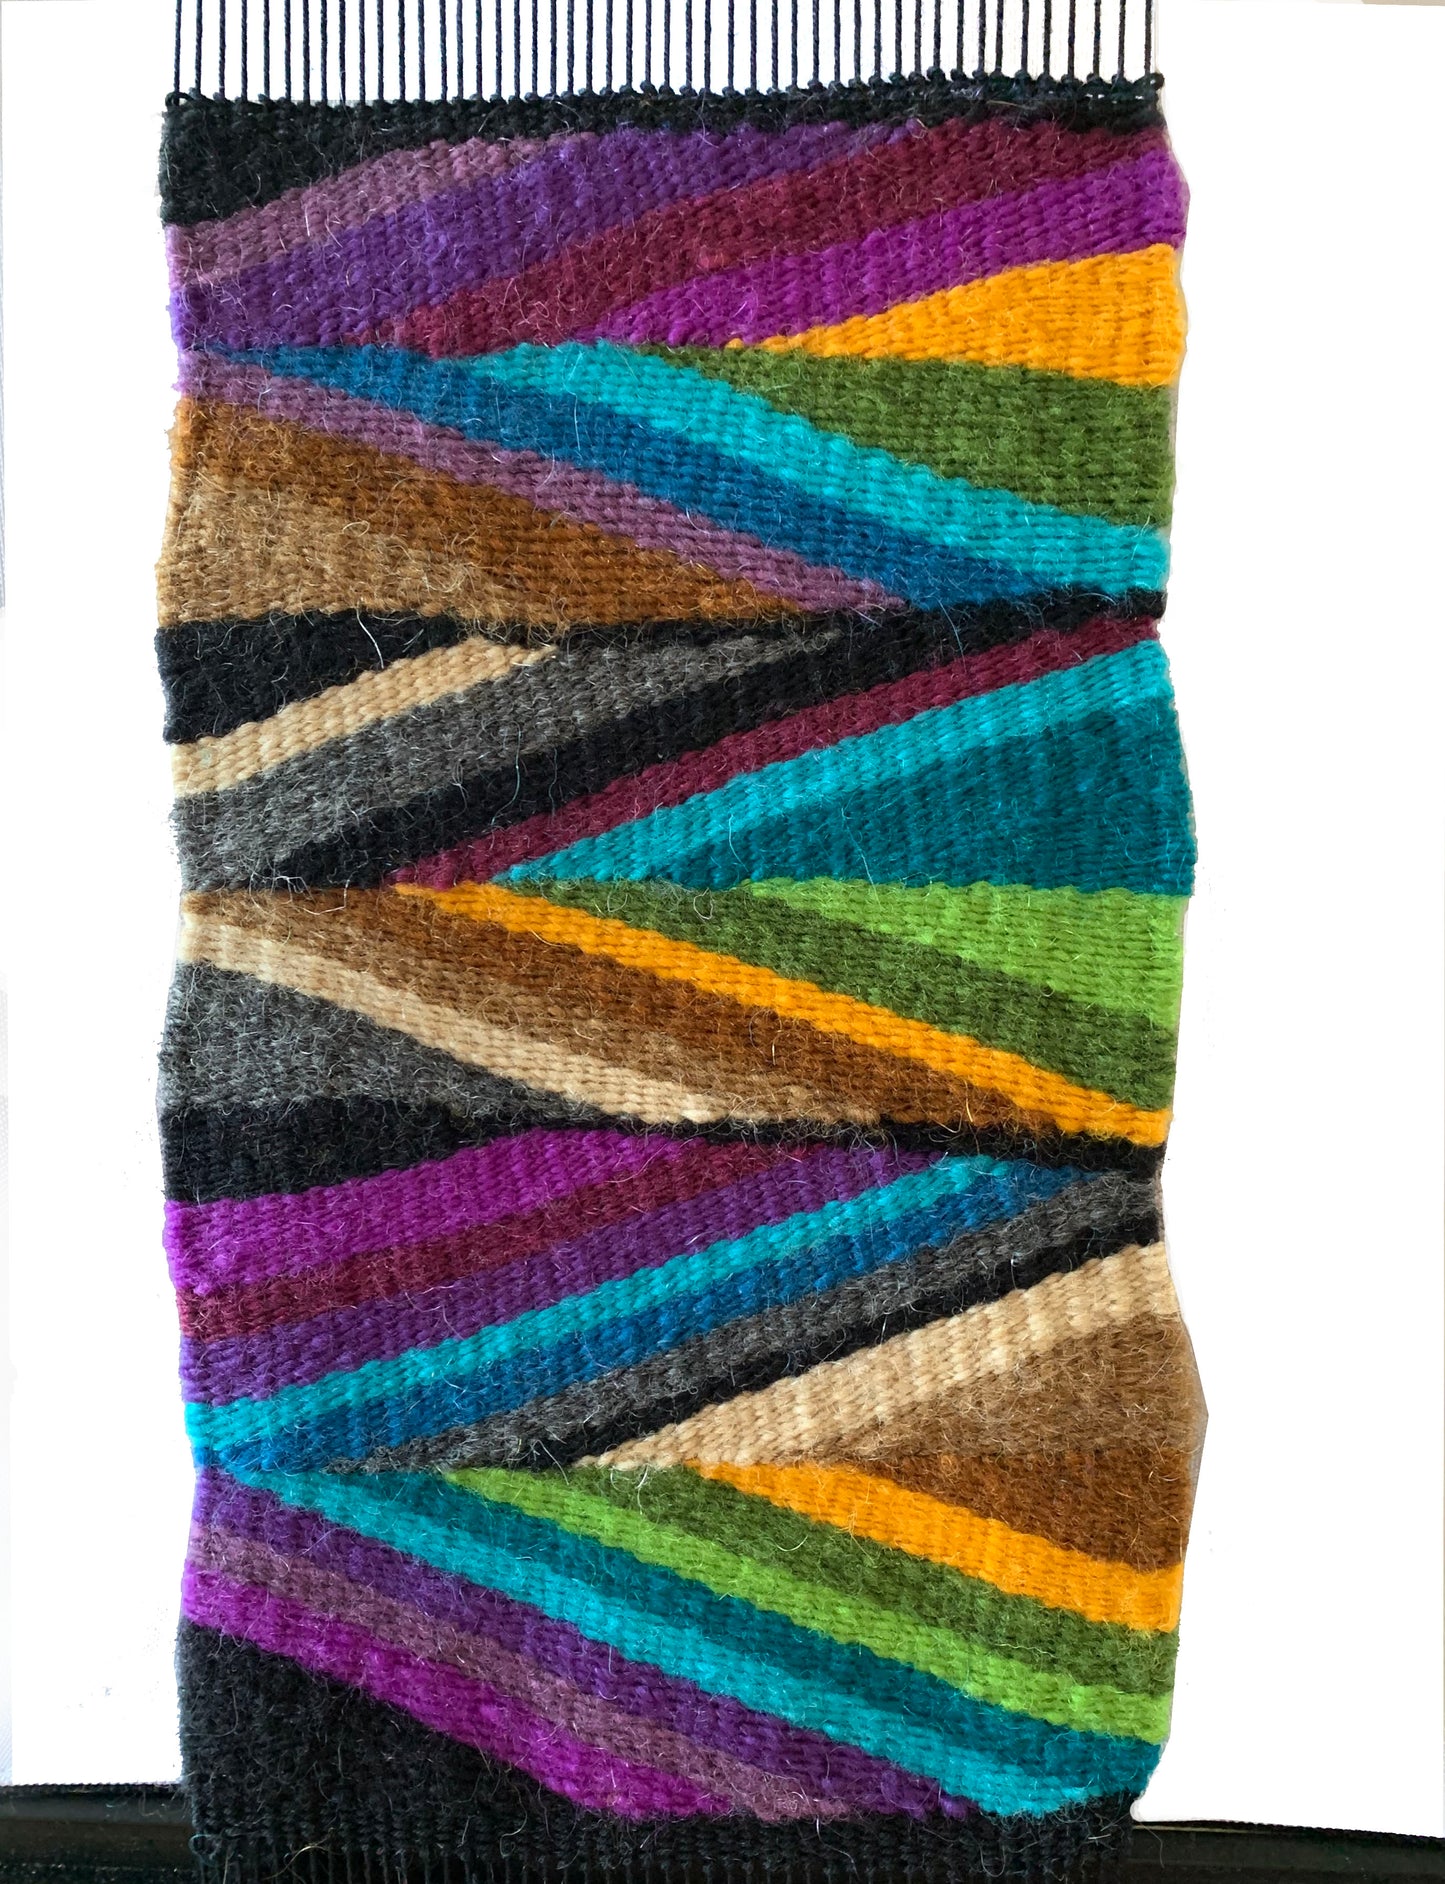 The Kaleidoscope Wedge Weave Tapestry Kit